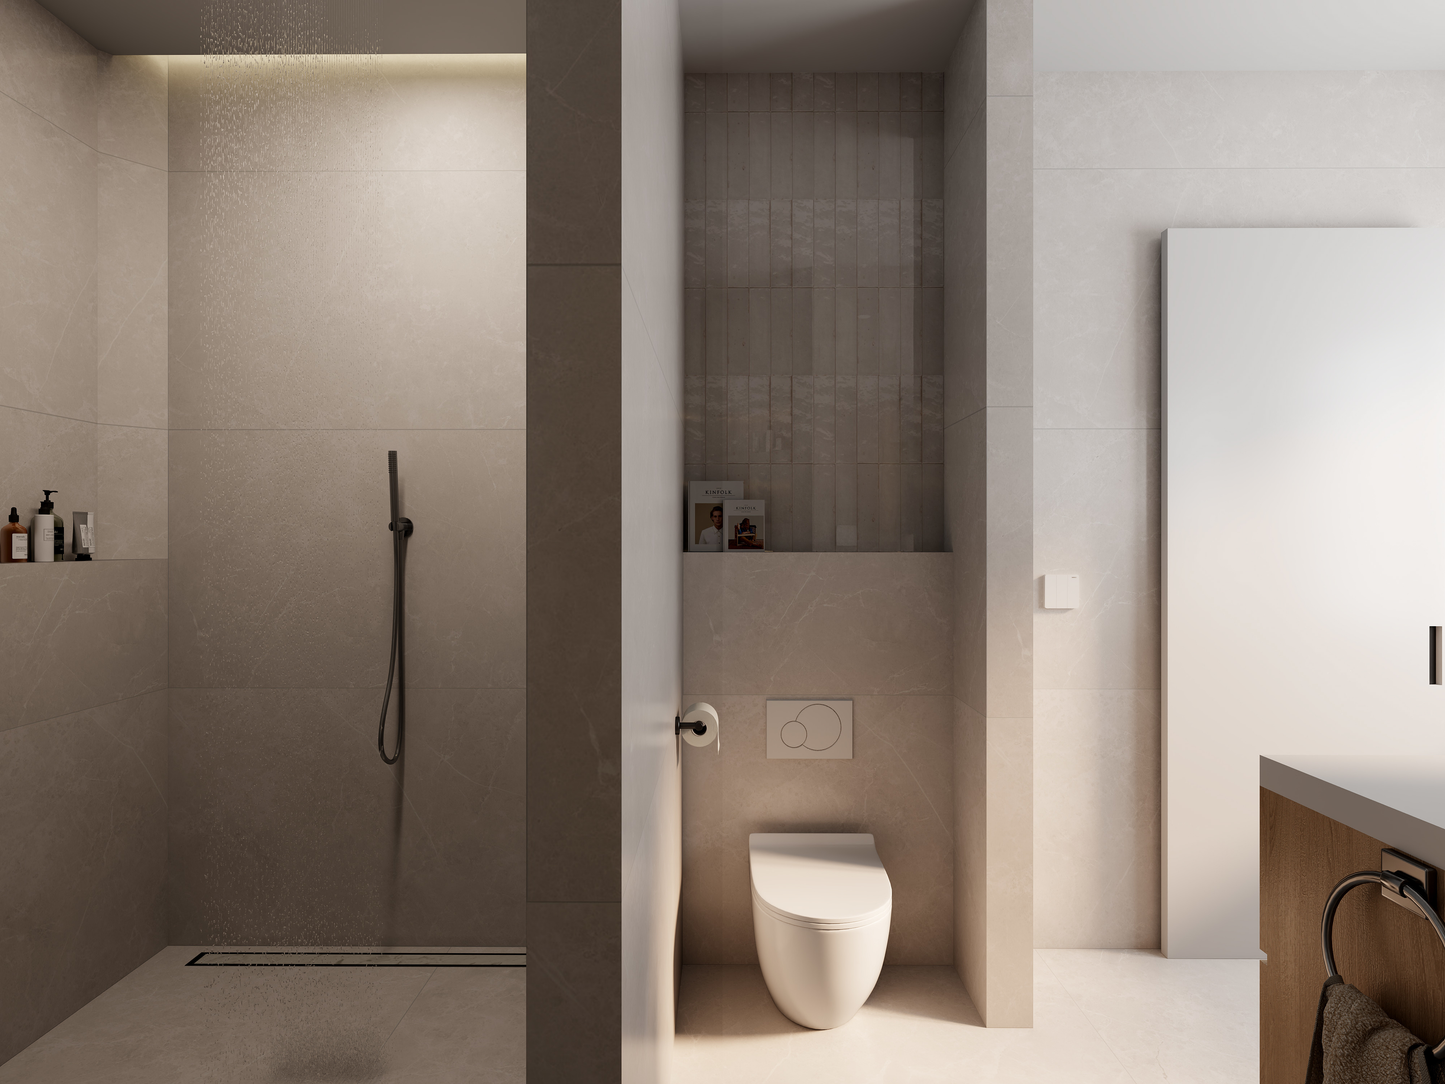 Bathroom Design + Layout Service